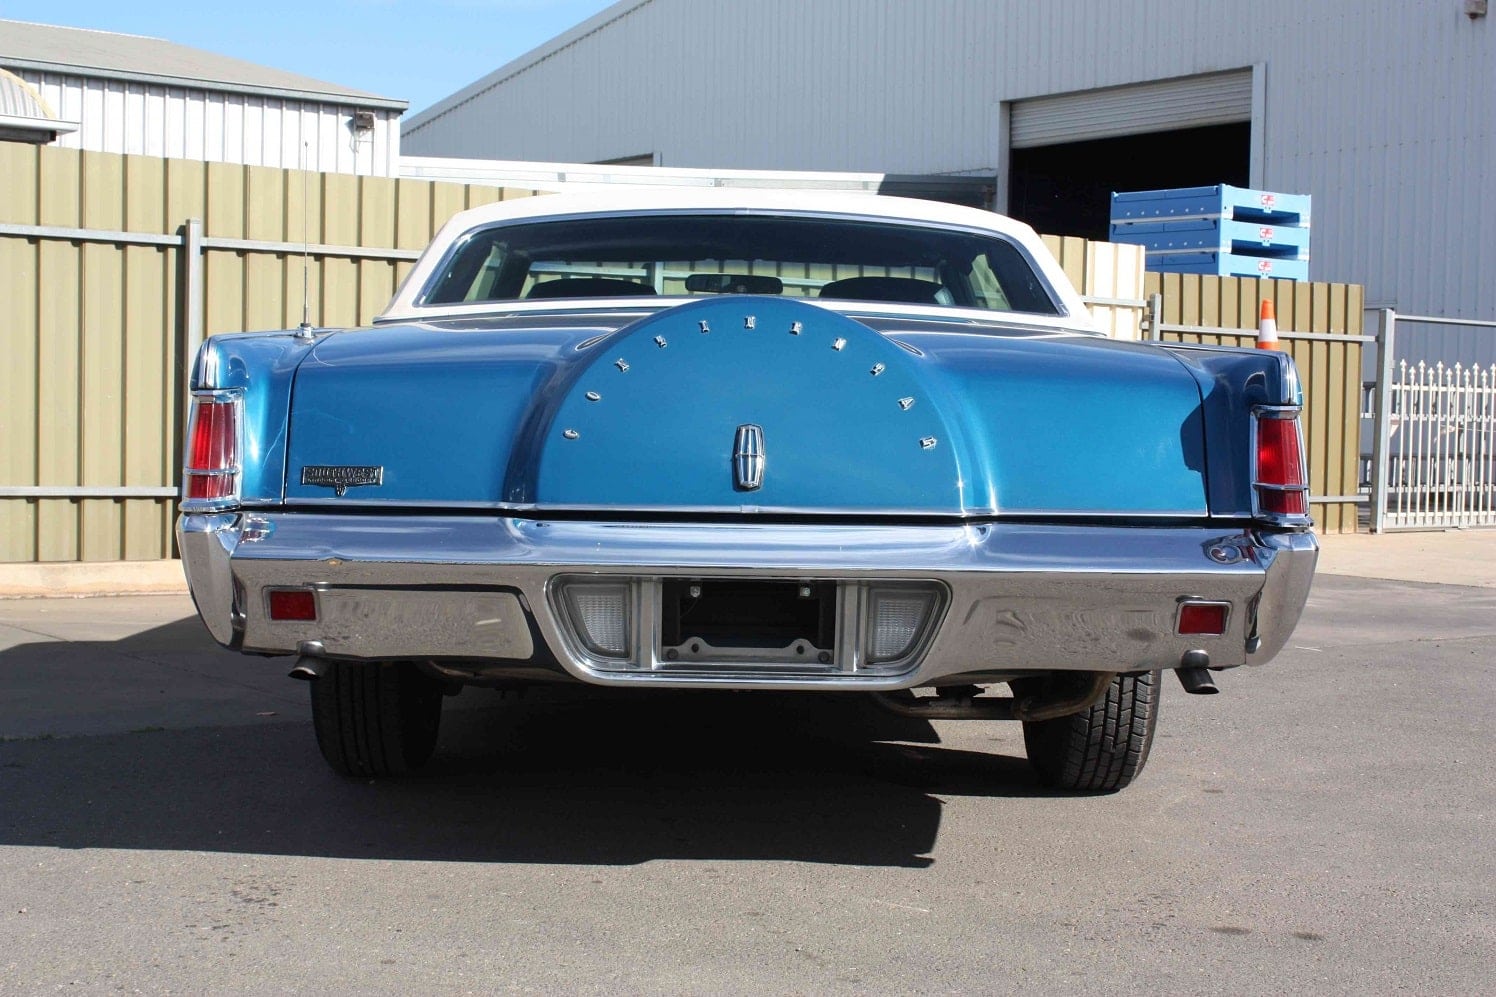 1971 Lincoln Continental - blue